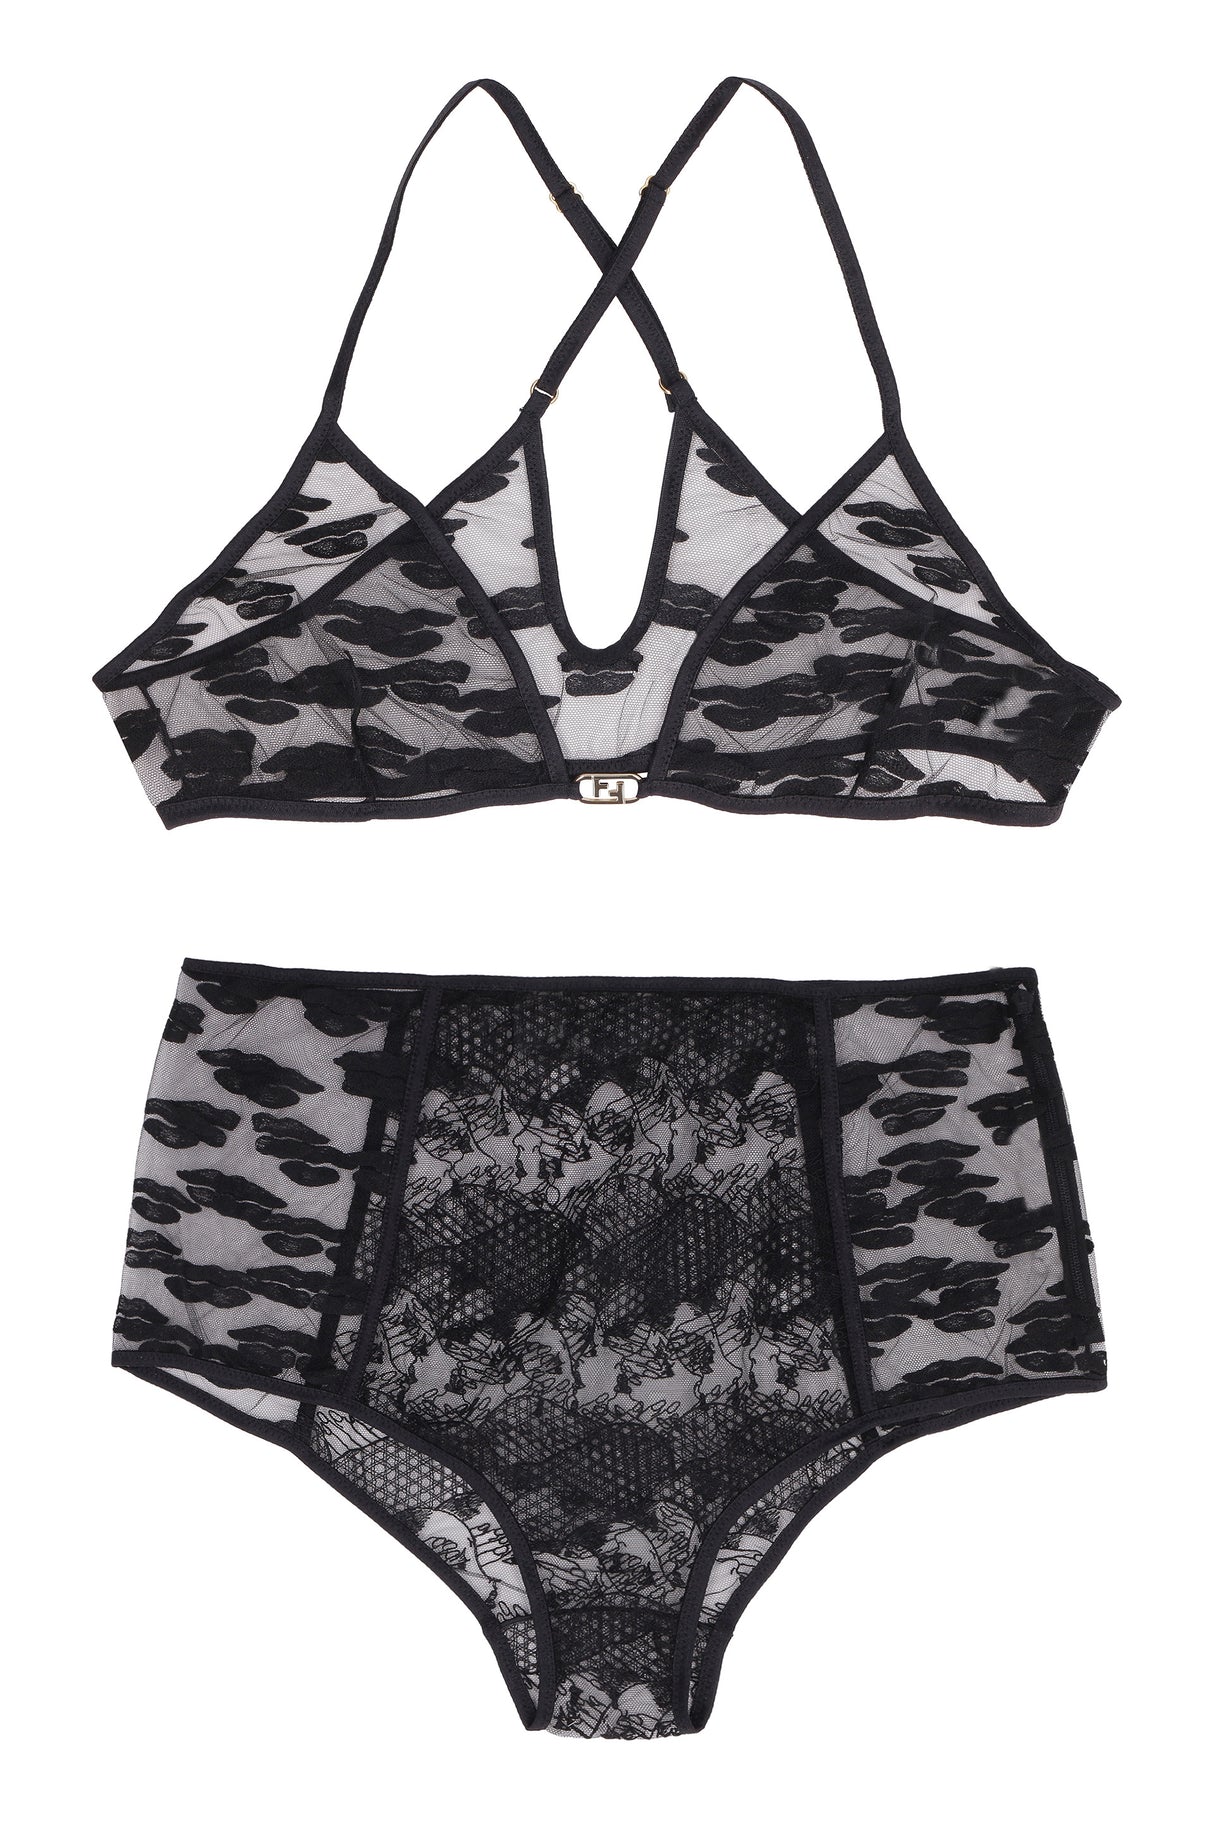 Black Lace Lingerie Set for Women - SS22 Collection